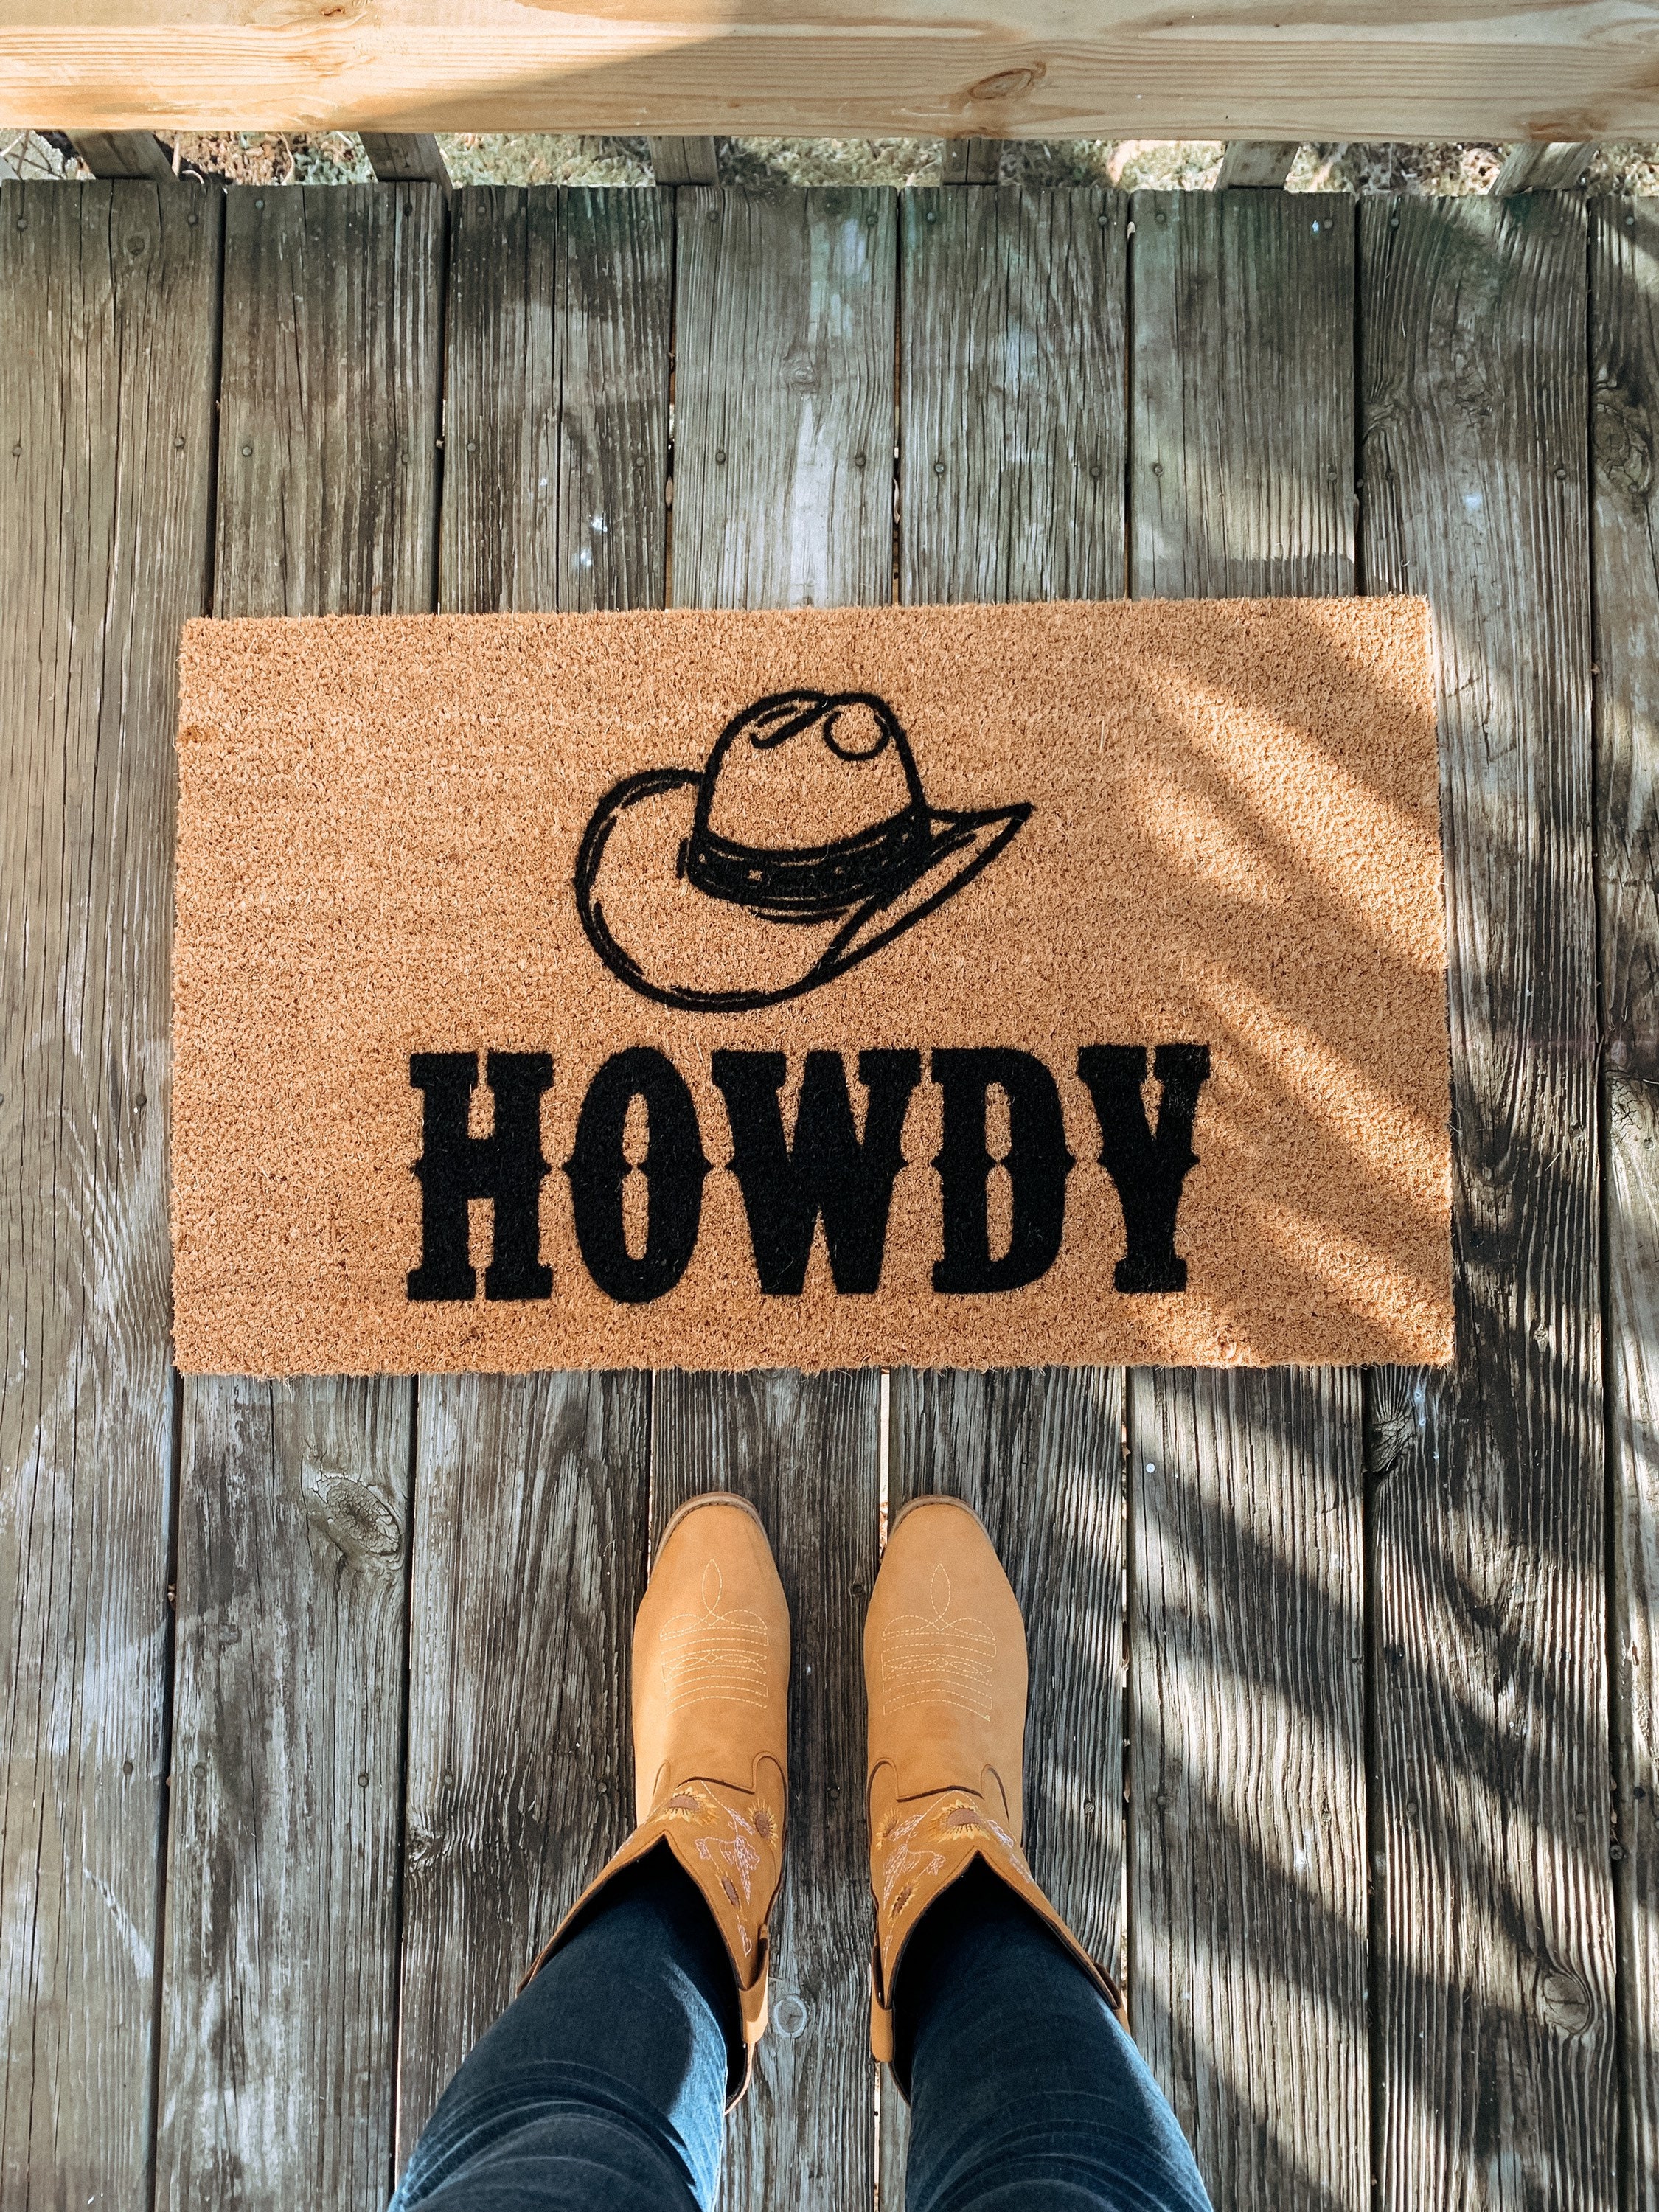 Howdy Cowgirl Welcome Mat – Joetta's